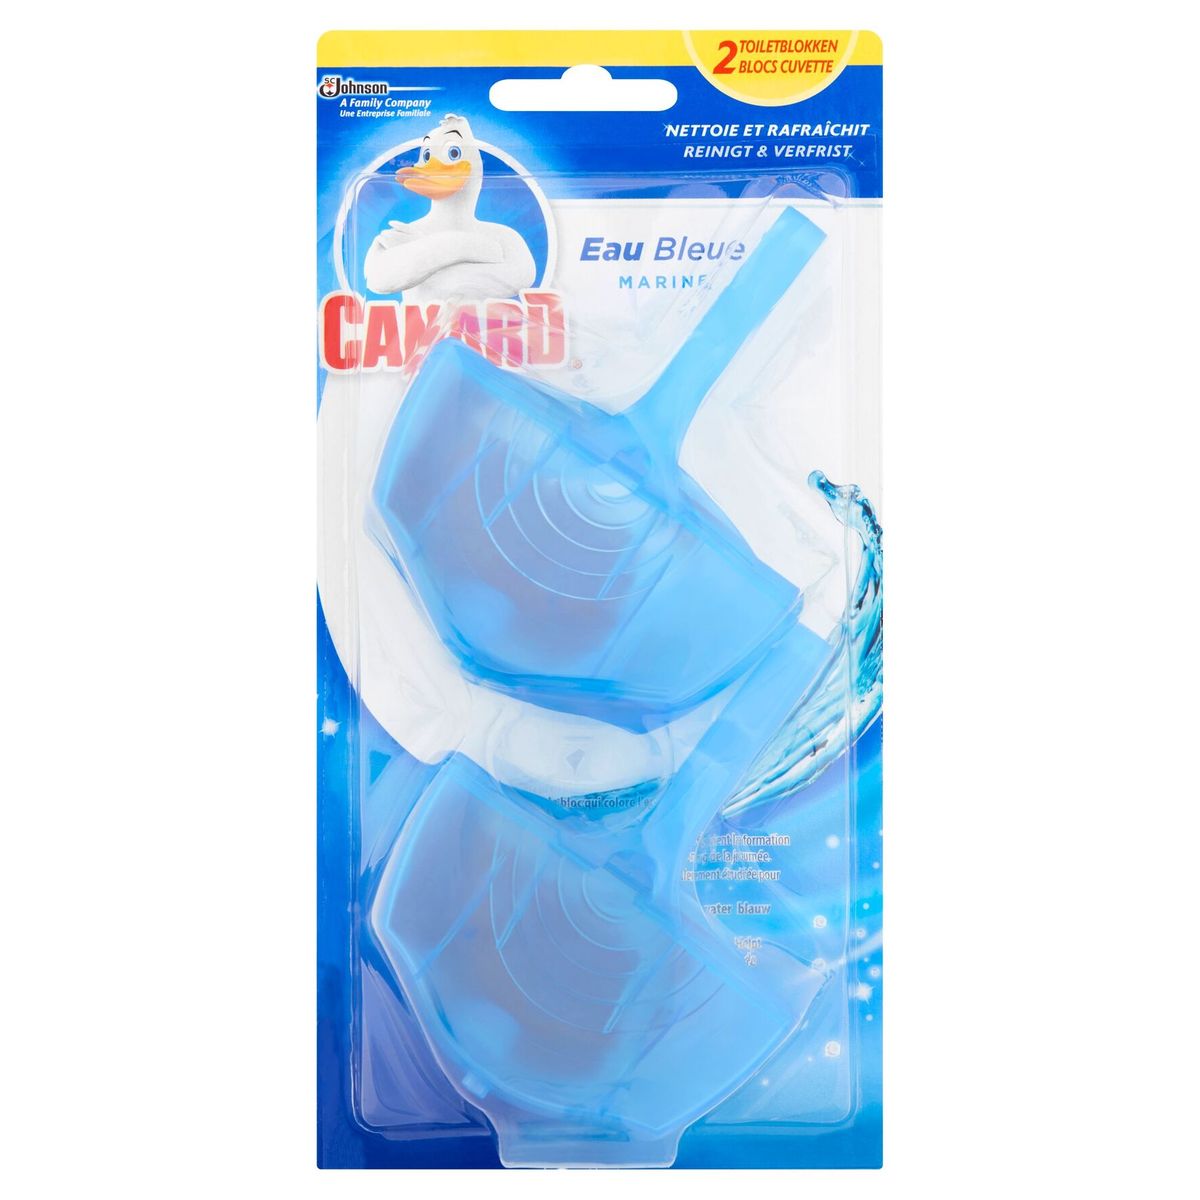 Canard®-Toiletblokken Eau Bleue Marine- 2 x 40 g